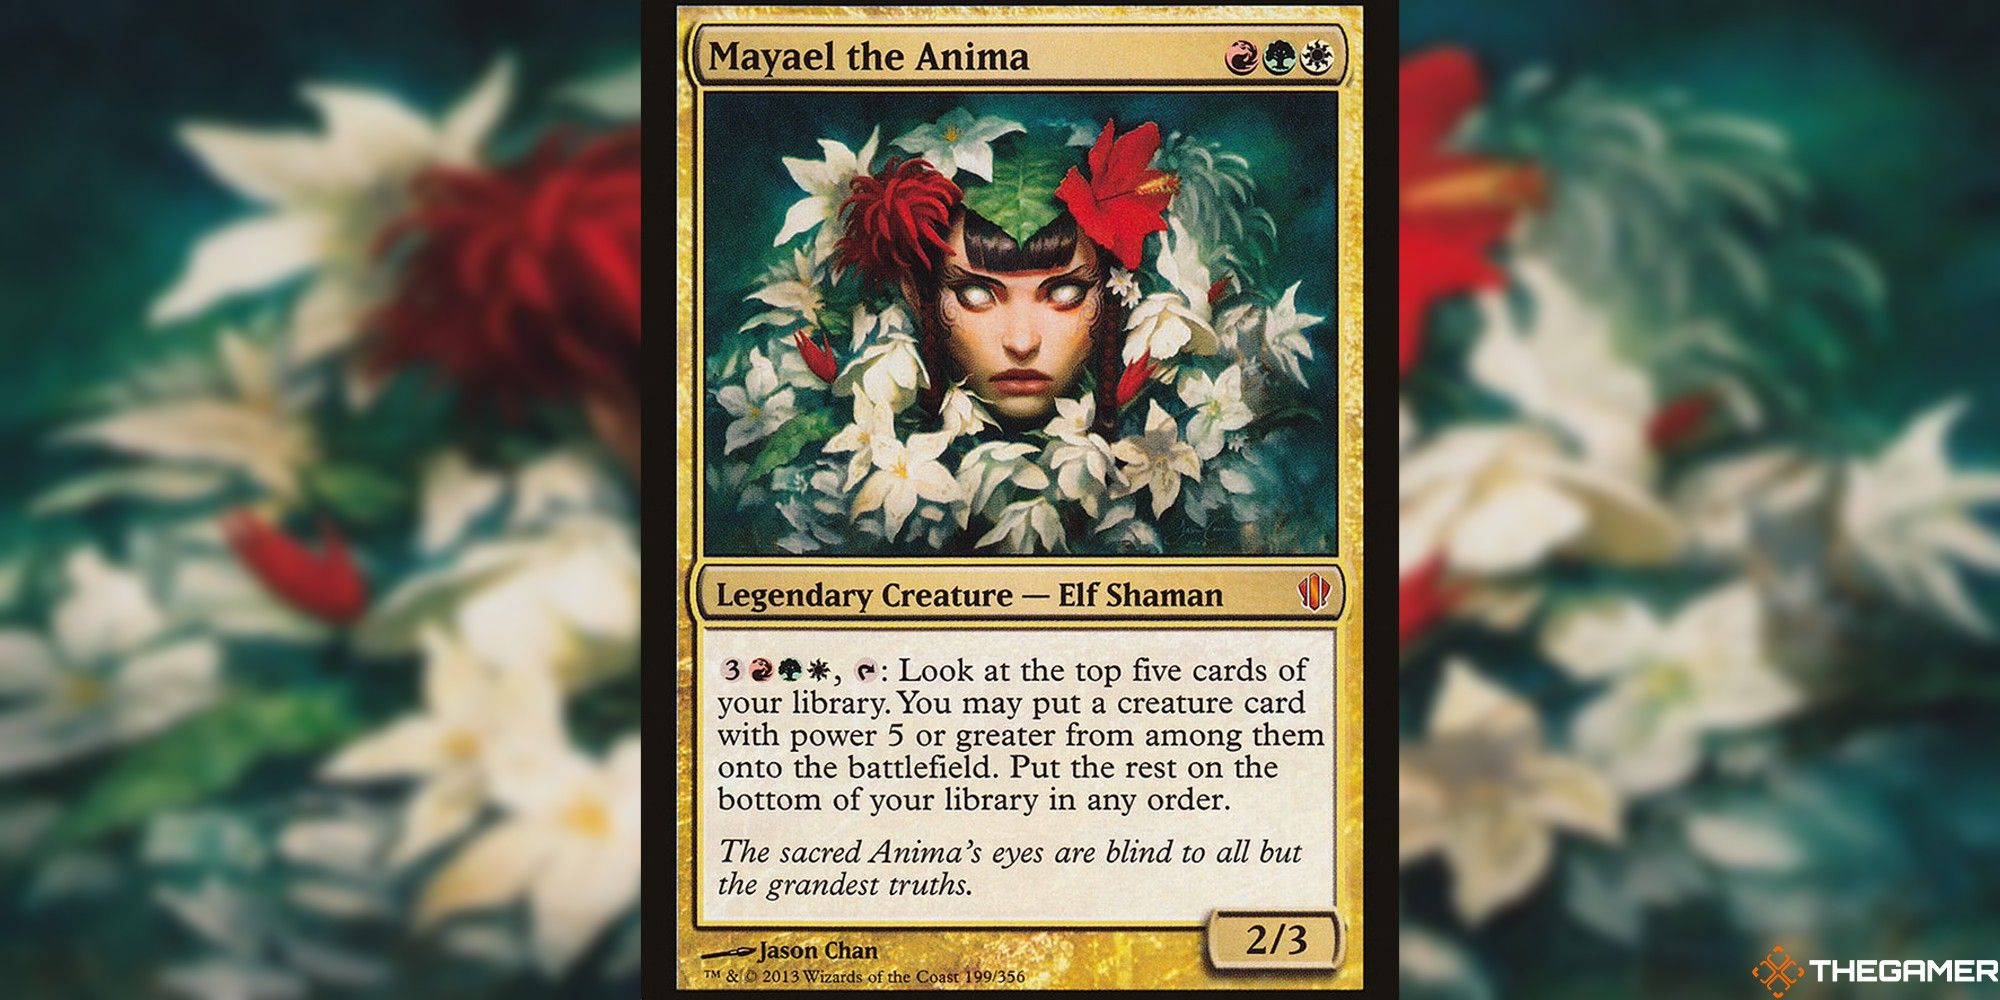 mtg mayael the anima full card and art background